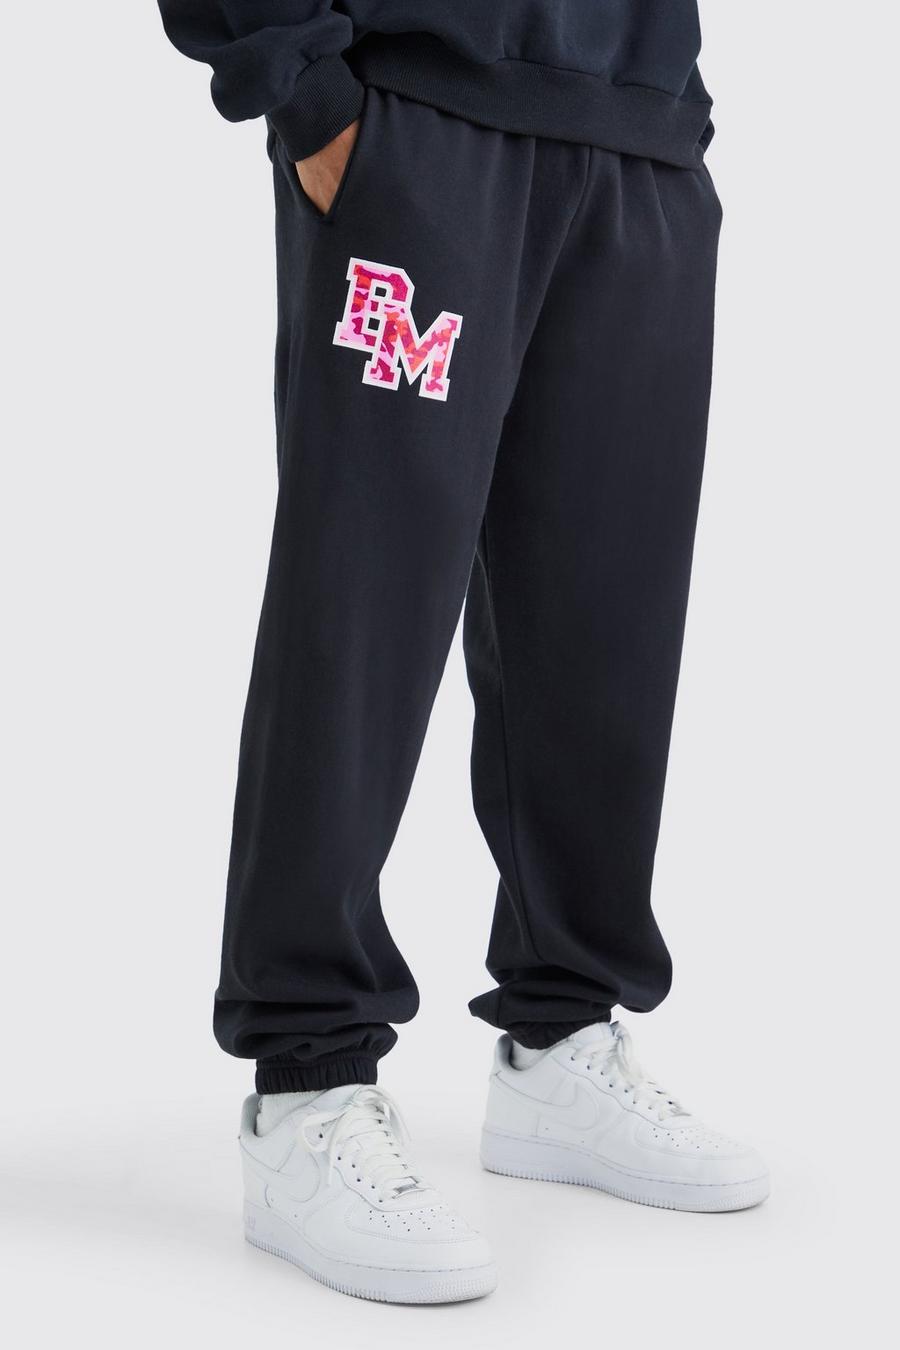 Pantaloni tuta oversize stile Varsity con grafica BM, Black image number 1